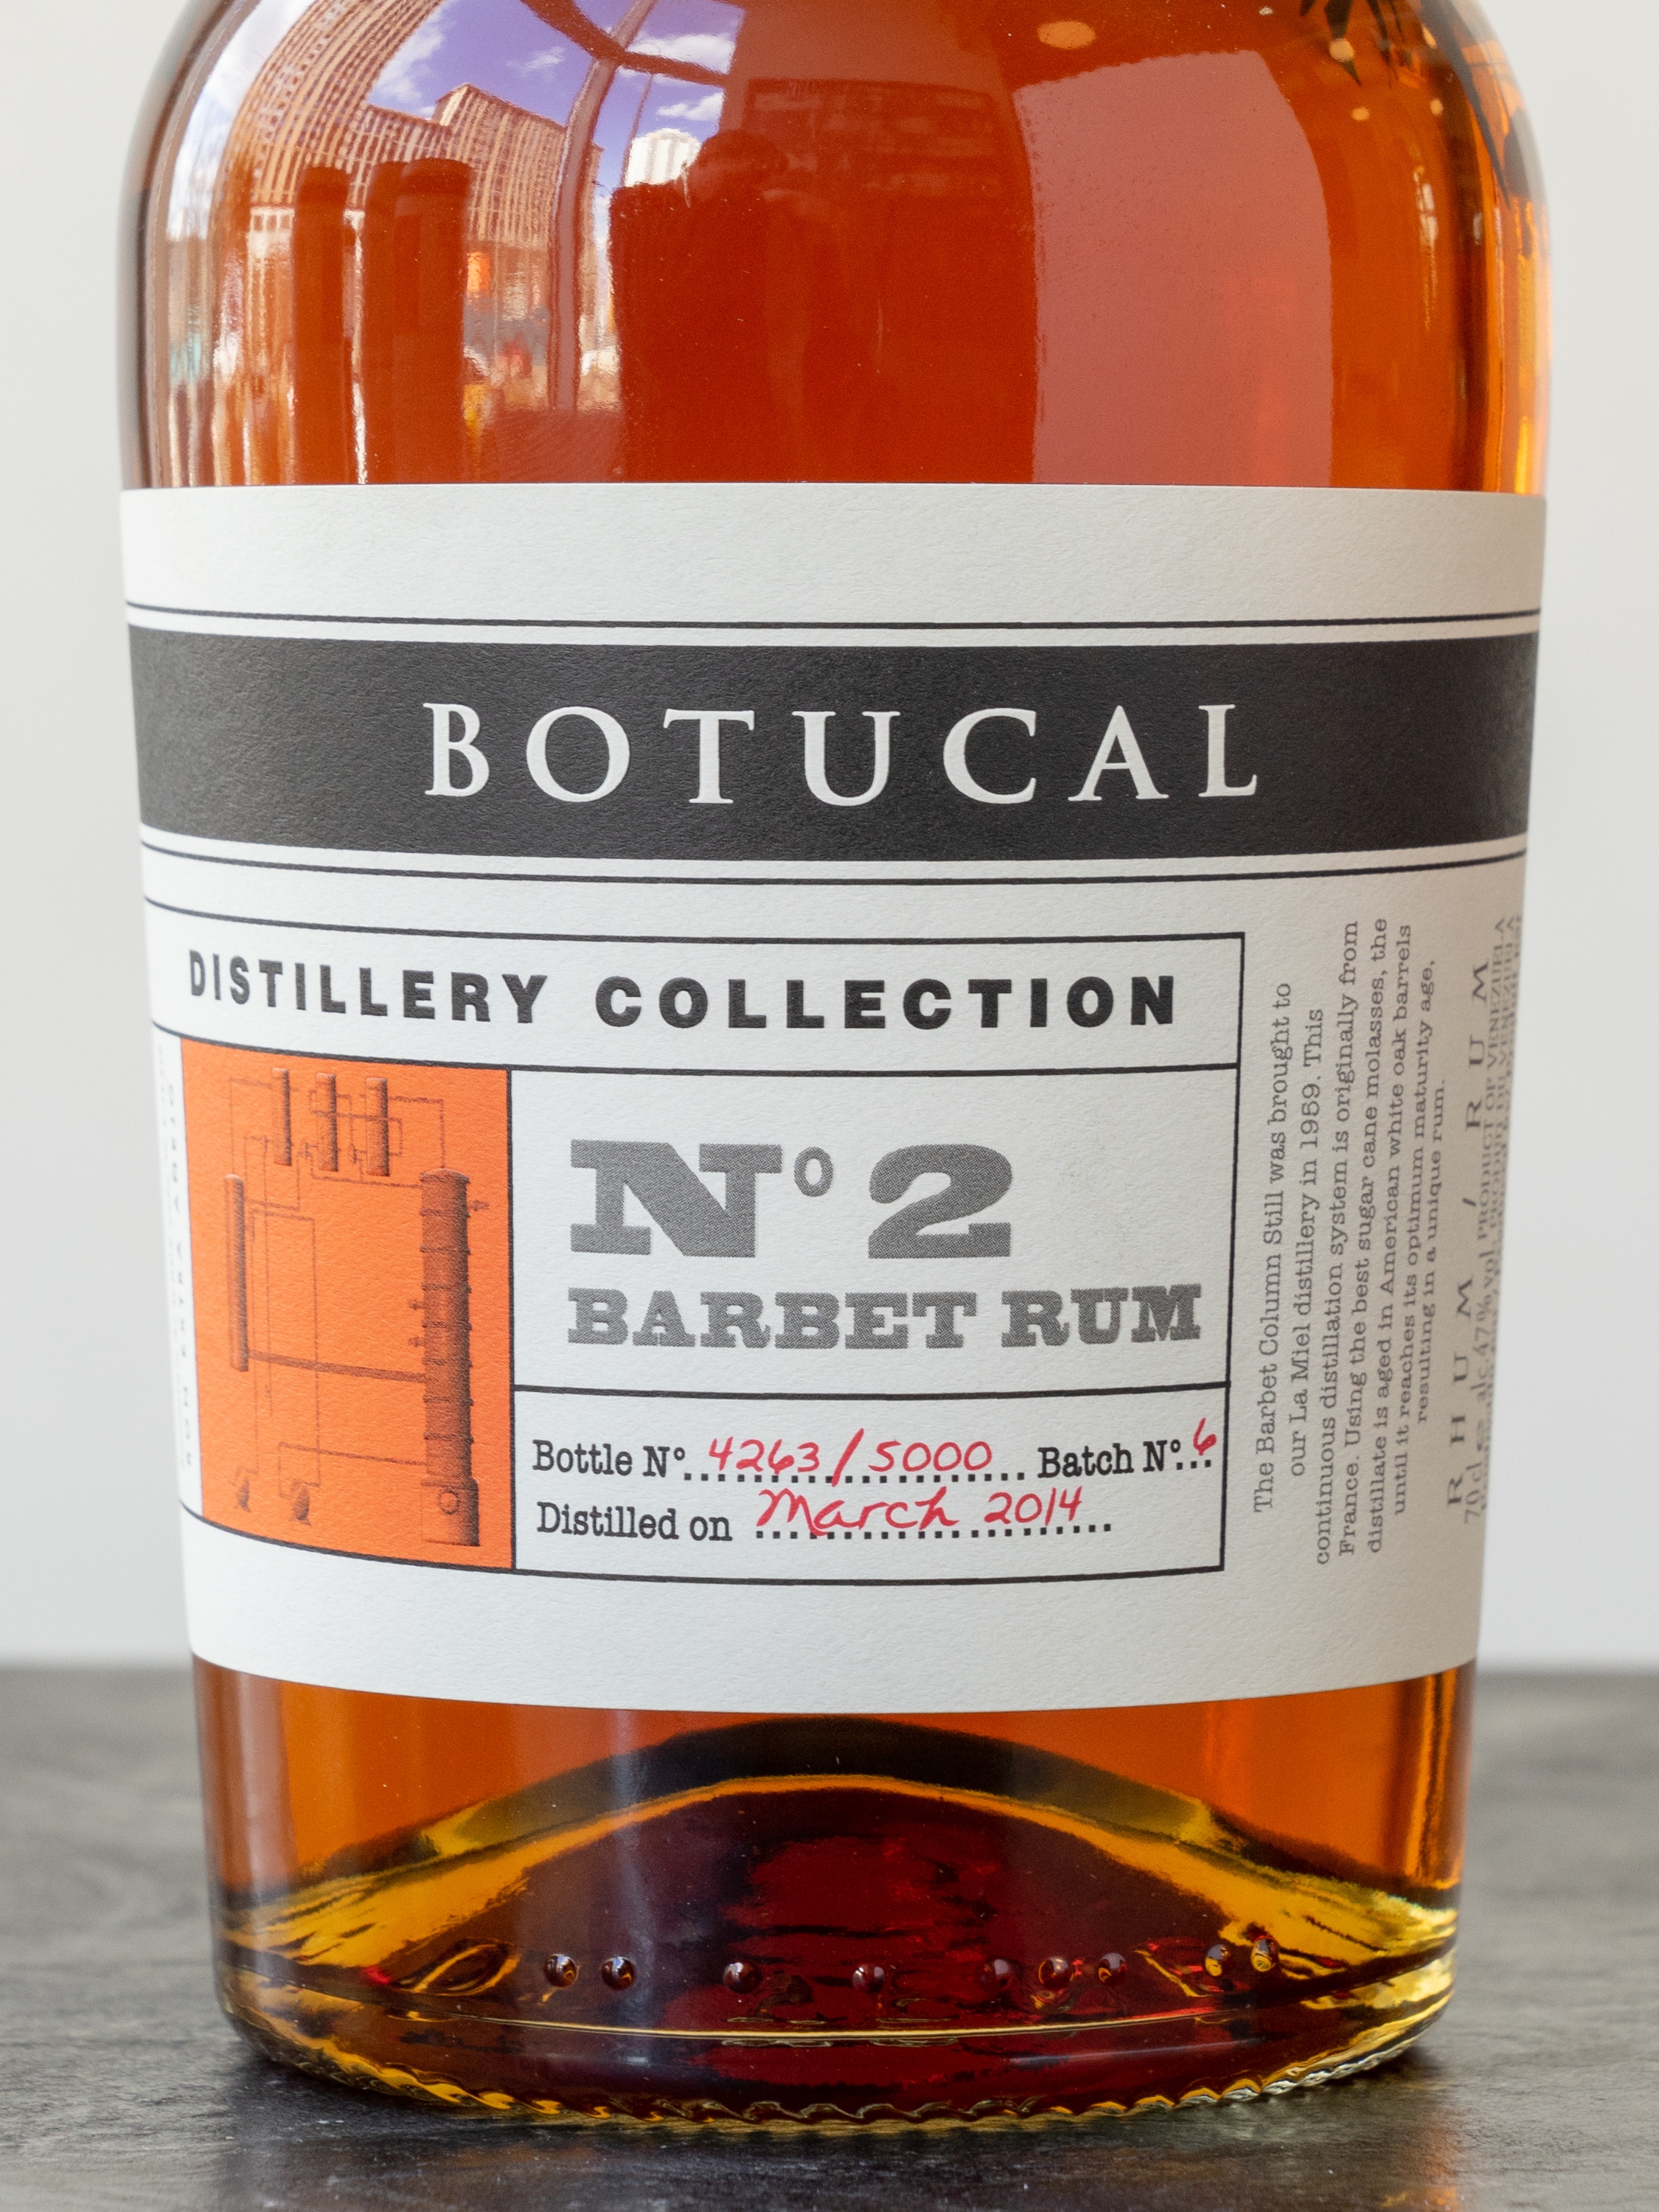 Ром Botucal Diplomatico Distillery Collection №2 Barbet / Ботукал №2 Барбет Коллекшн Дистиллерии 4 года